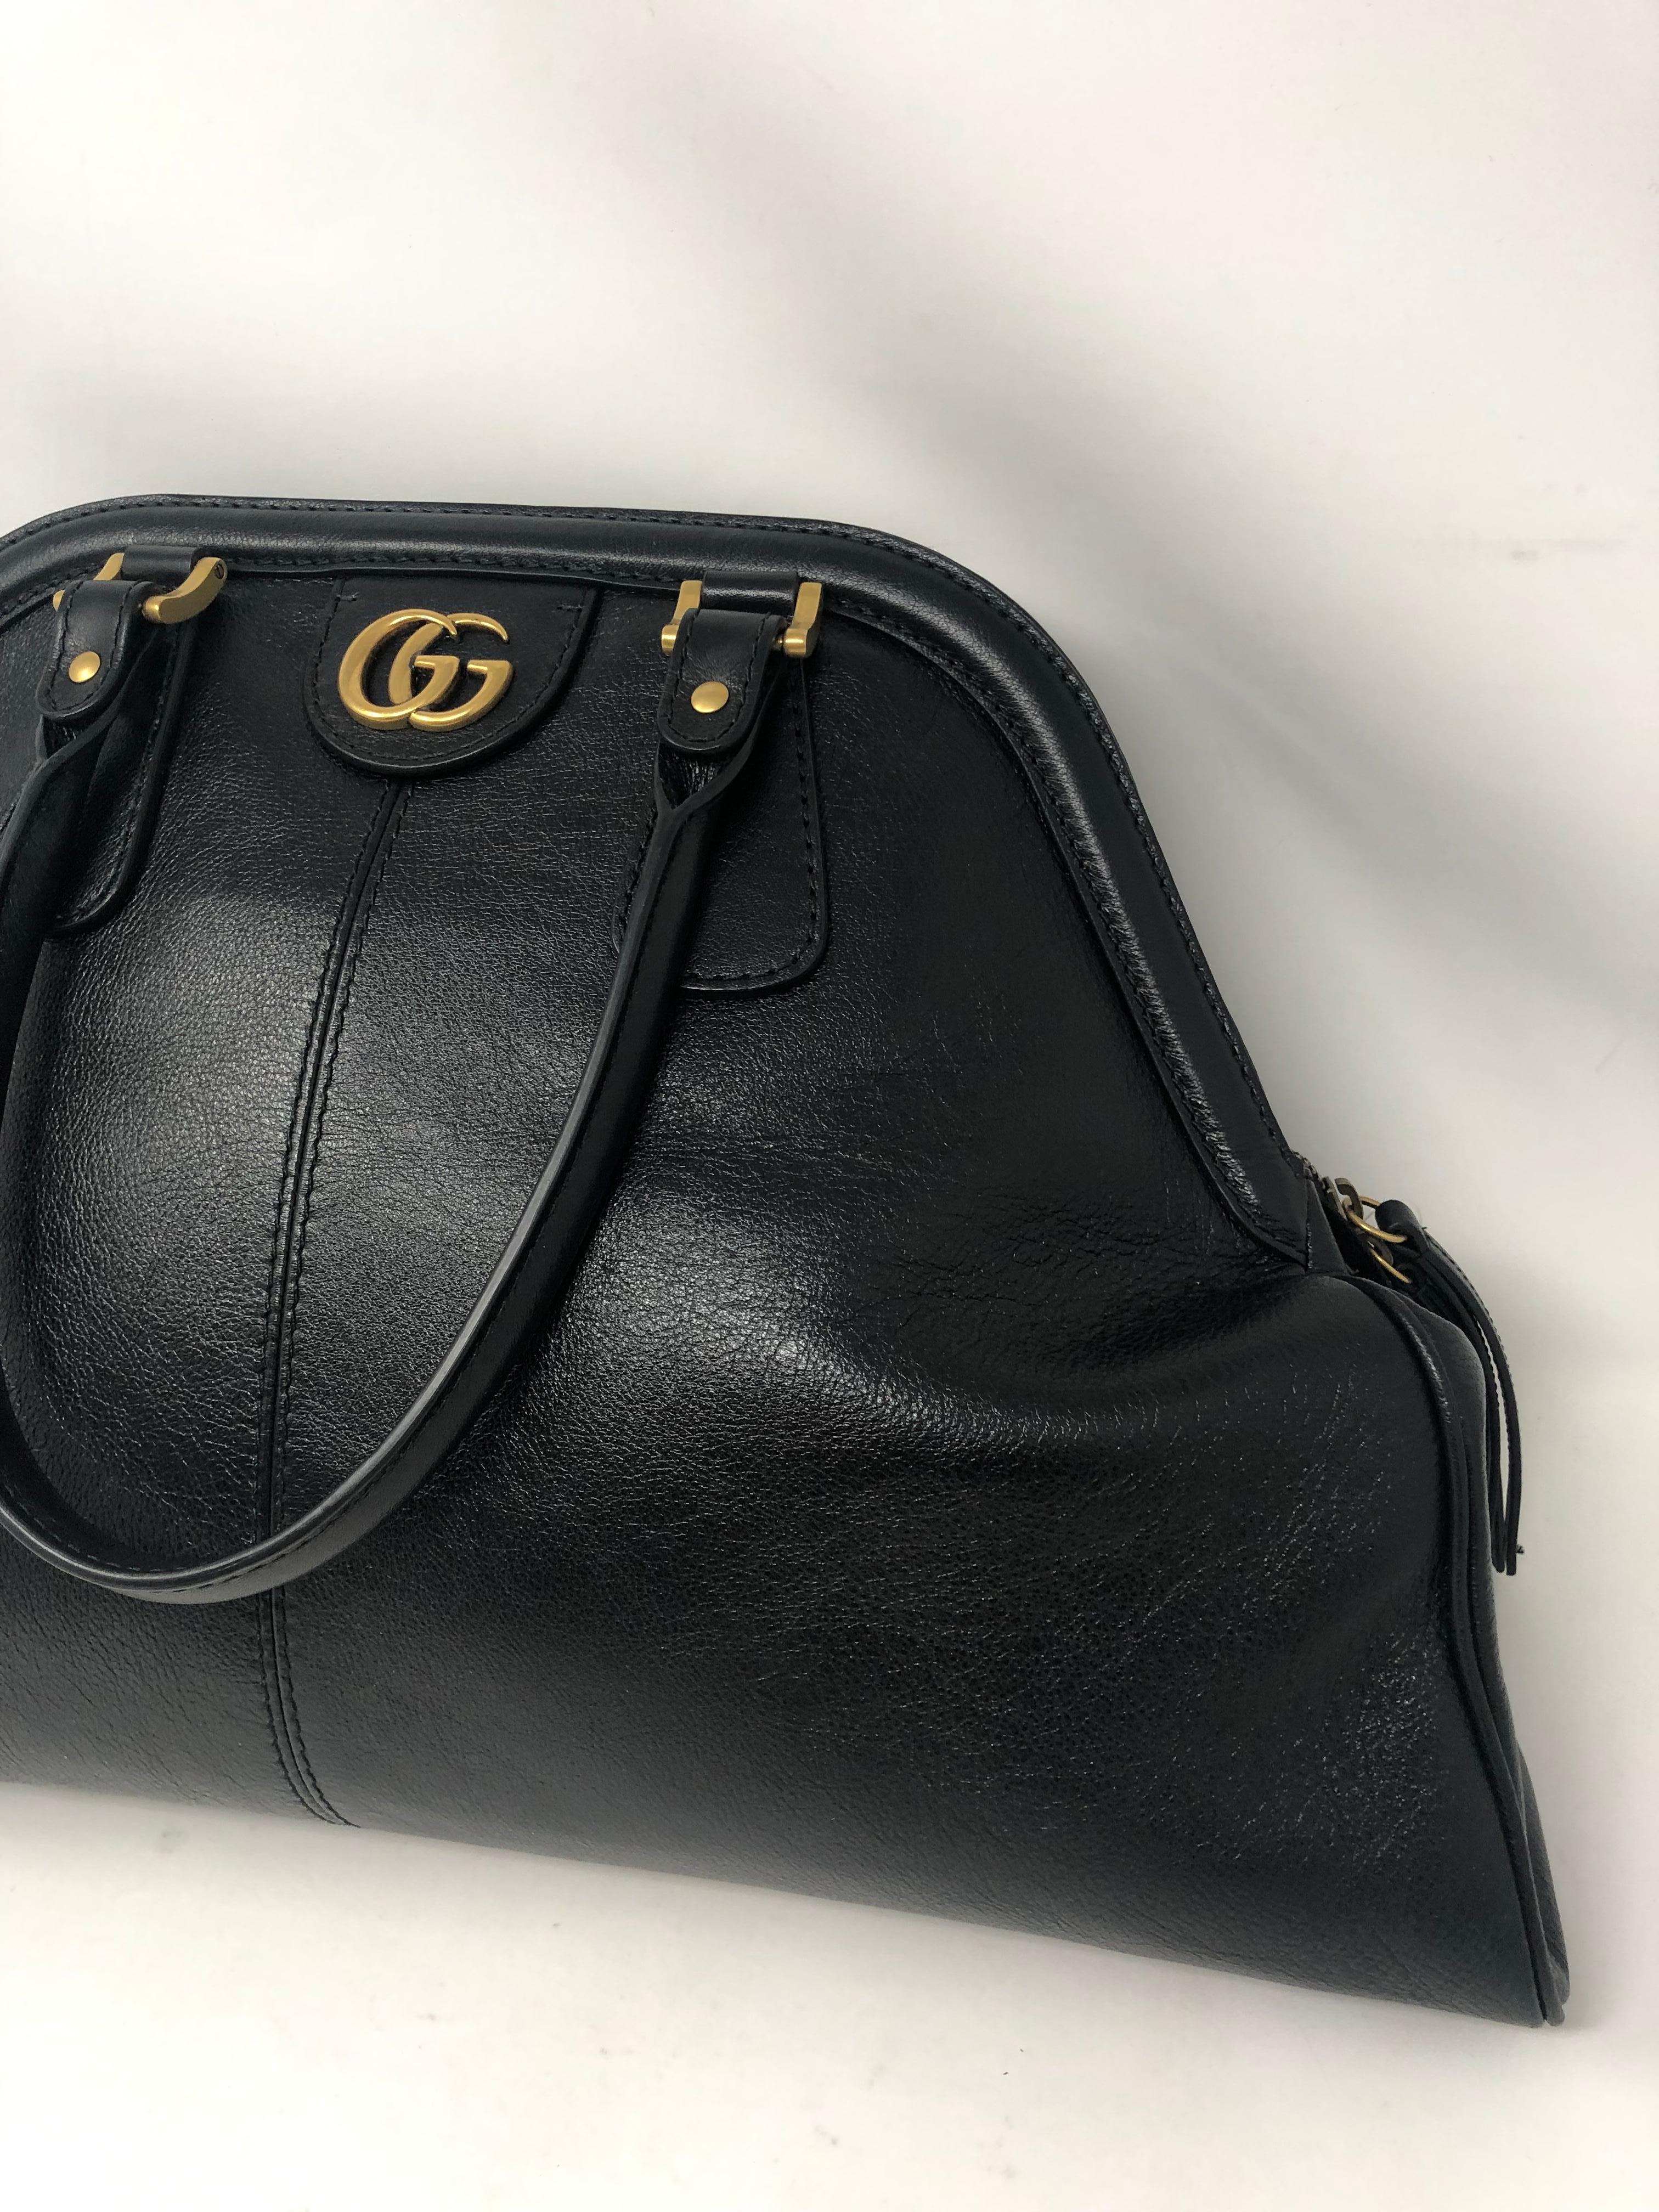 Gucci Re(Belle) Large Black Leather Bag  1